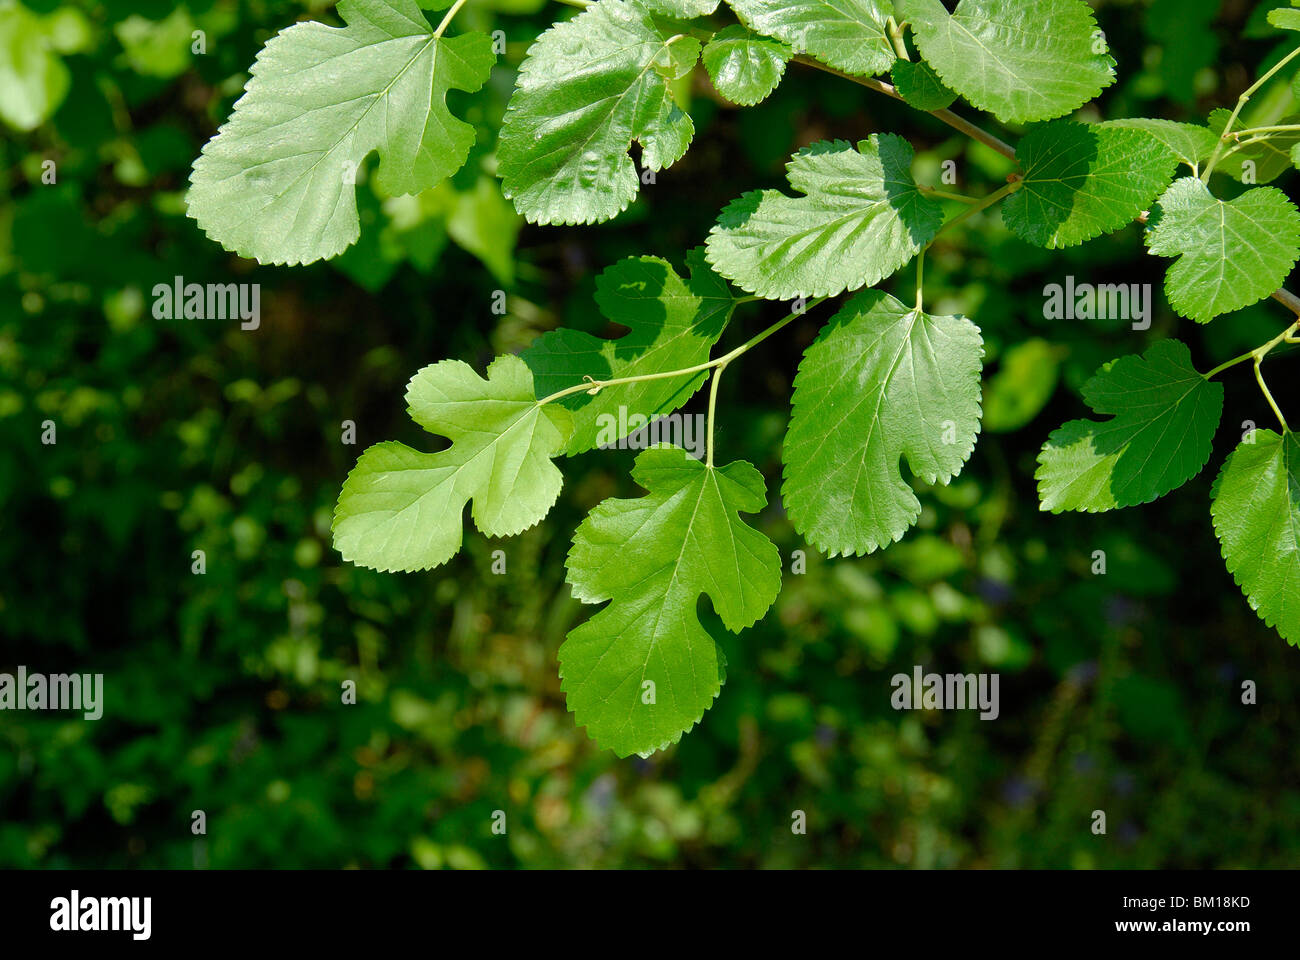 Morus alba, white mulberry leaves Stock Photo